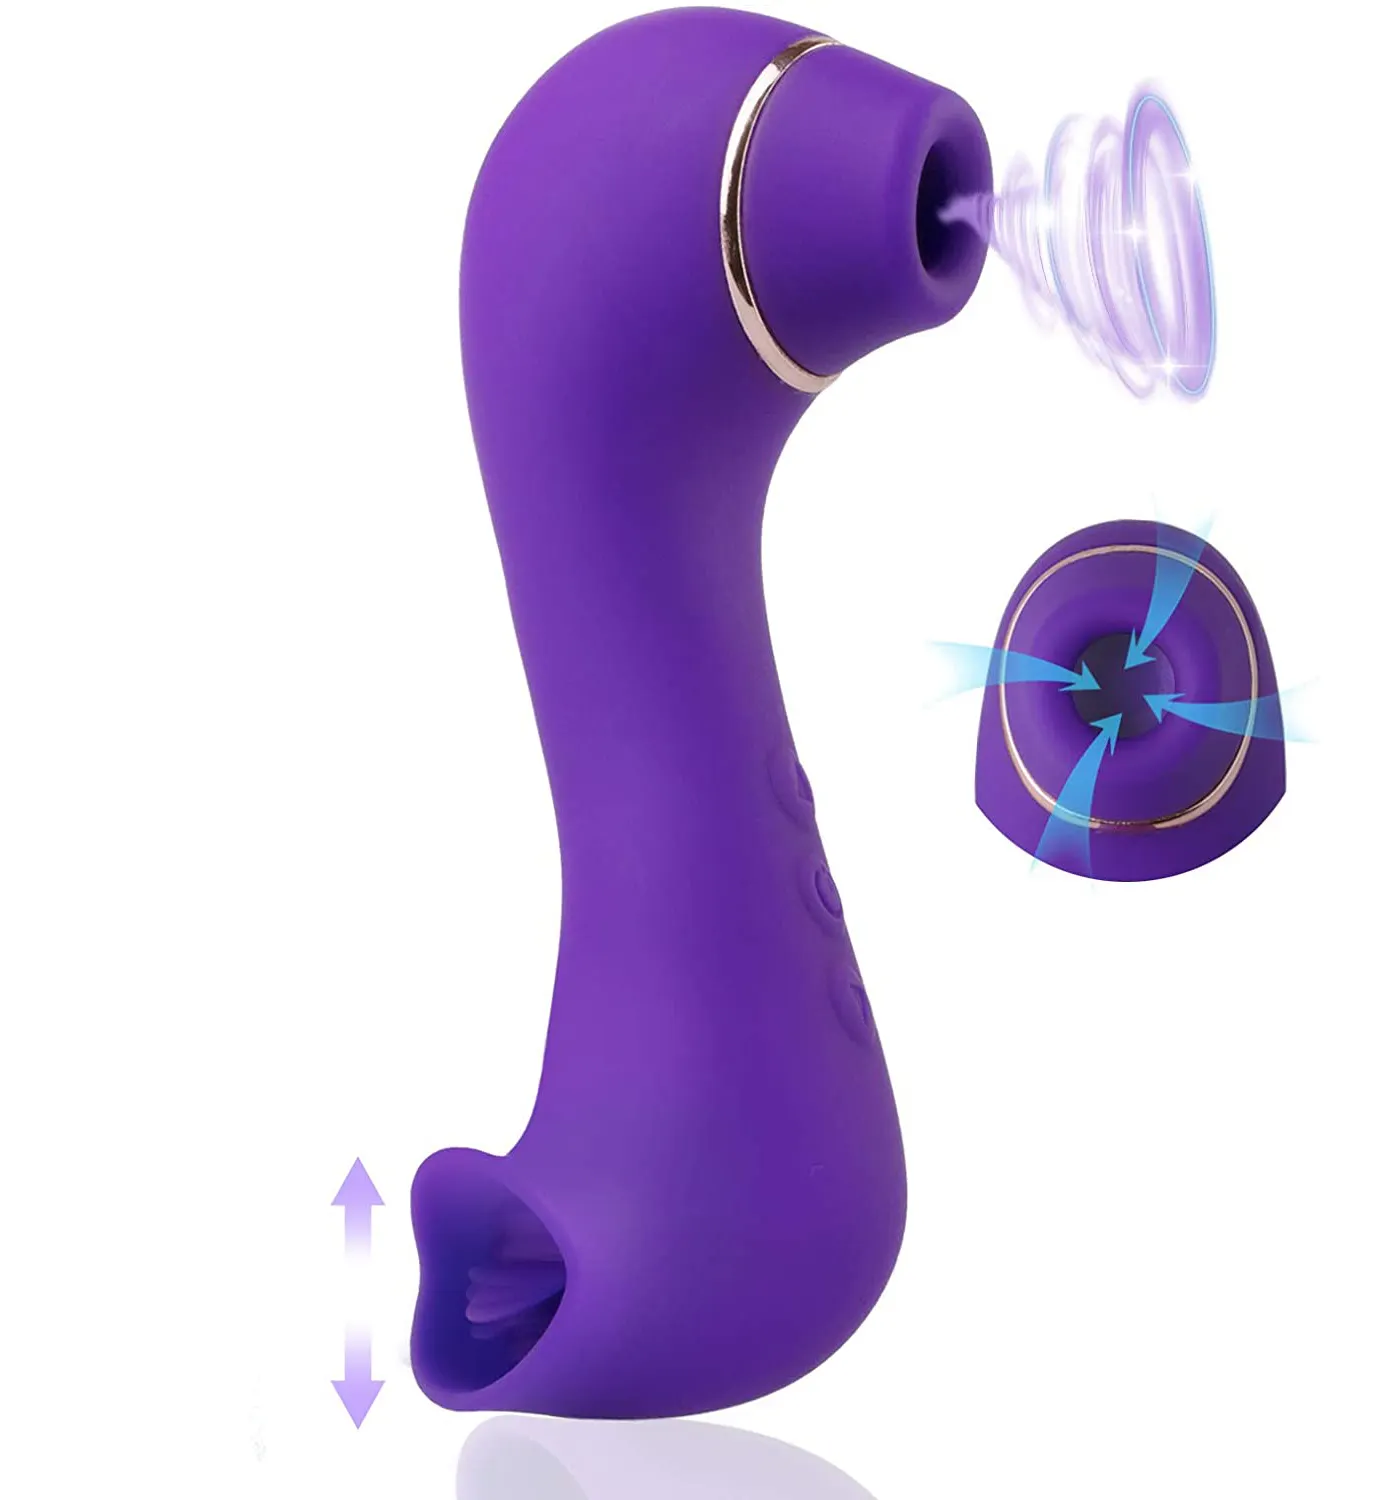 Vibrator penghisap klitoral dewasa, Vibrator Dildo G Spot dengan 7 mode isap kuat 10 getaran penghisap mulut